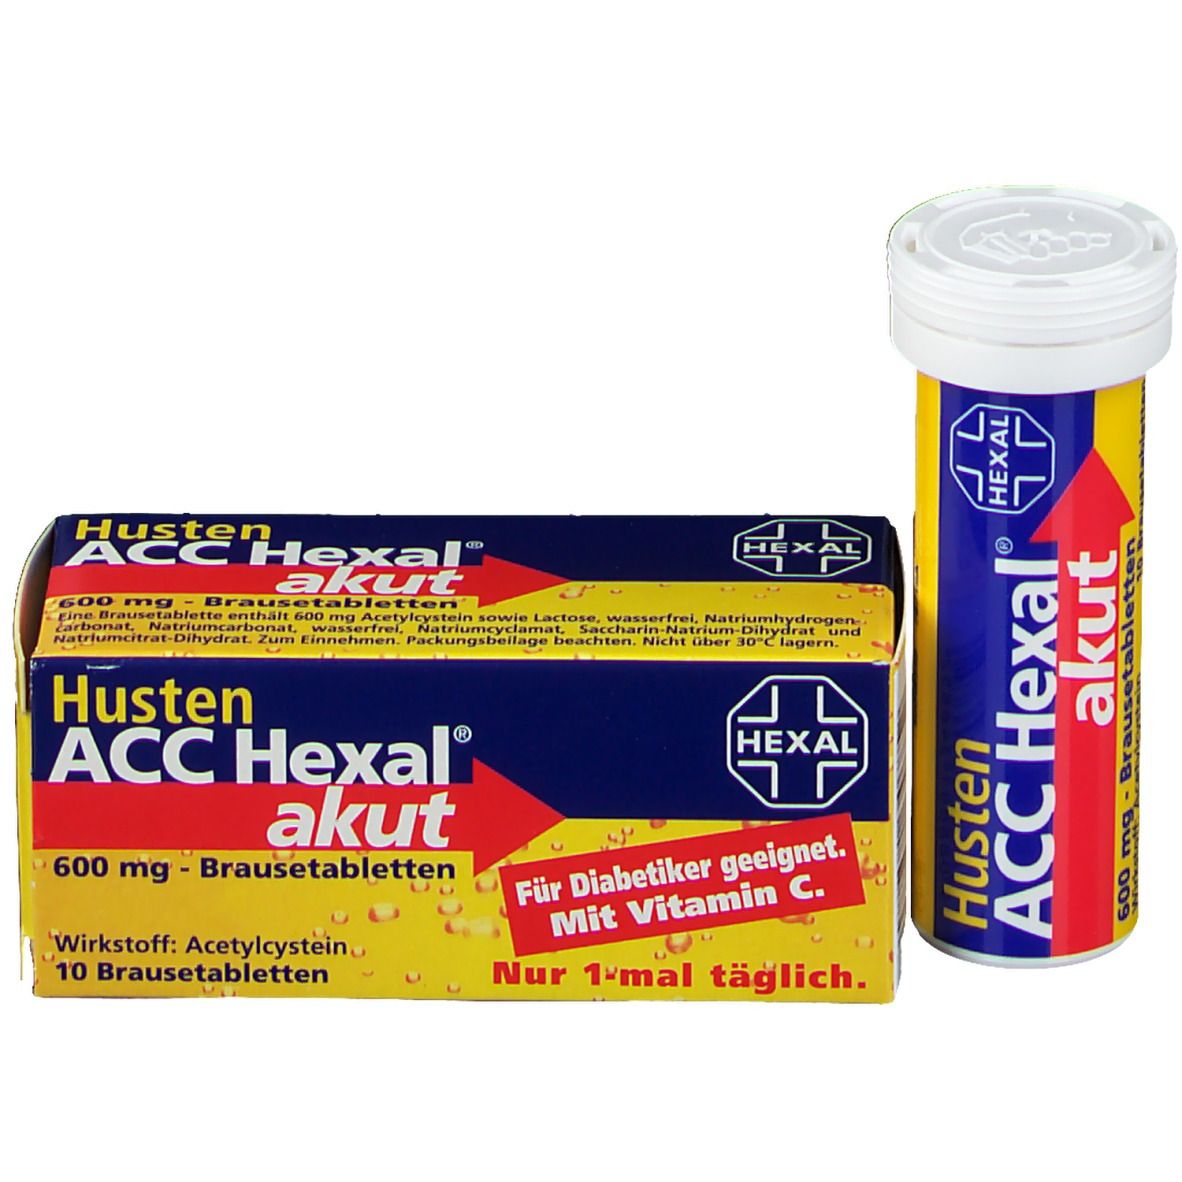 Husten ACC Hexal® akut 600 mg